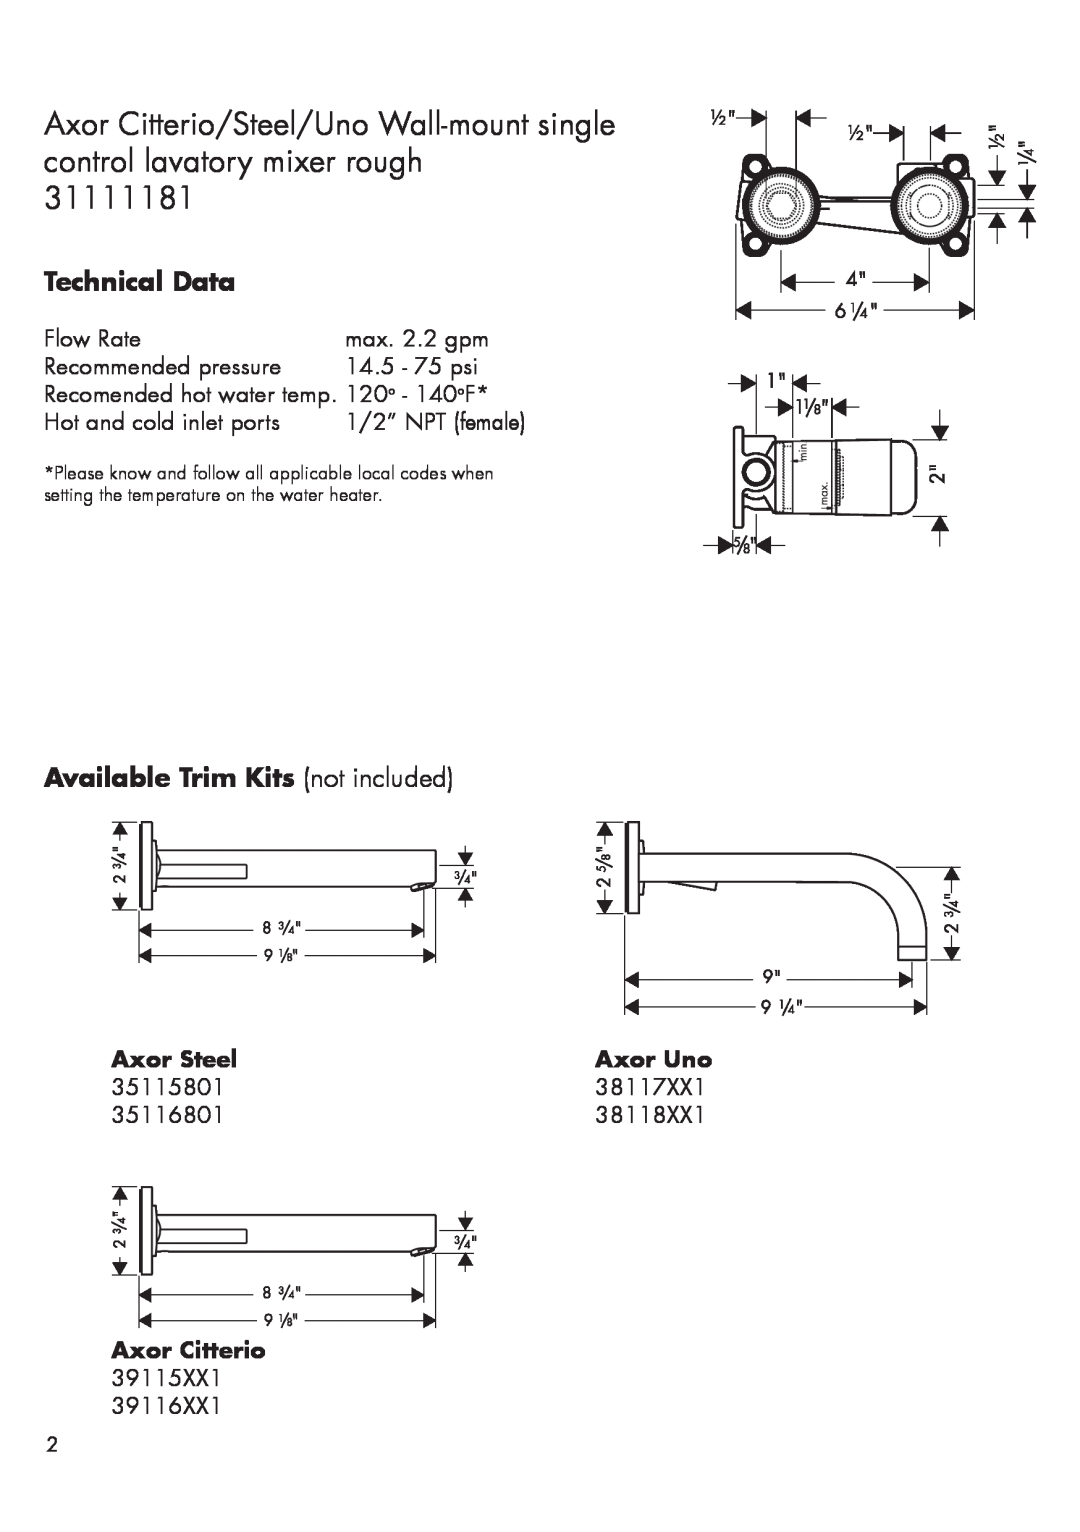 Axor 38111181 Technical Data, Available Trim Kits not included, Axor Steel, Axor Uno, Axor Citterio 